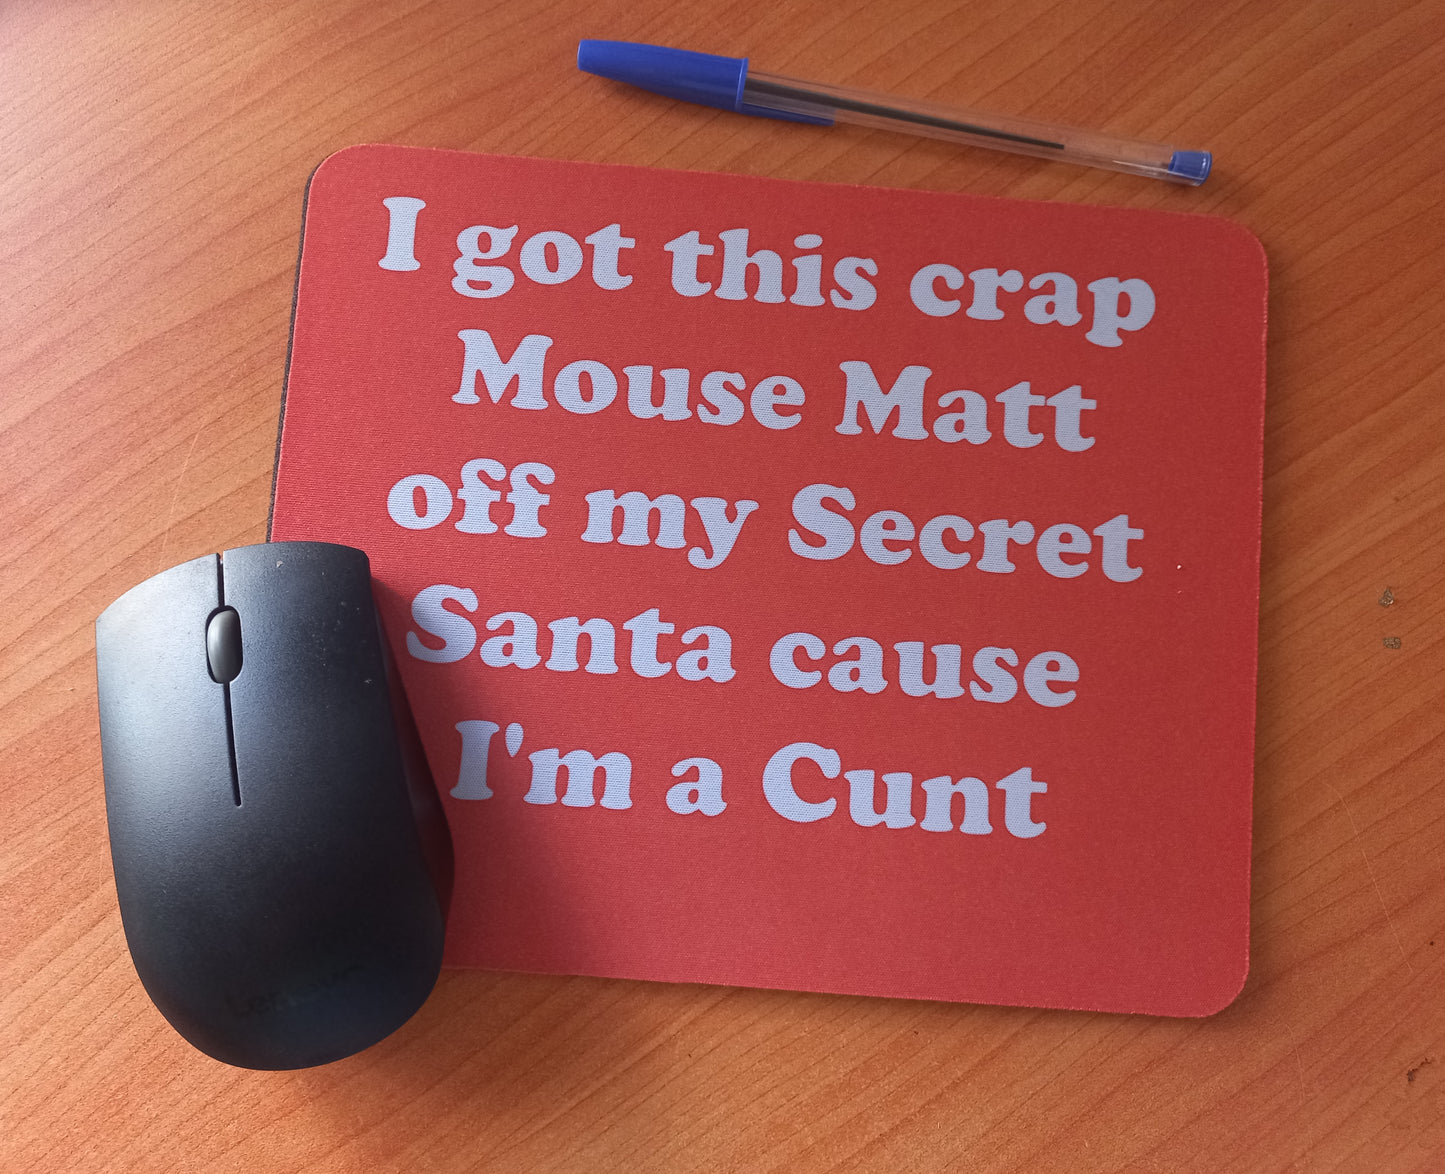 Sectret sants mouse matt